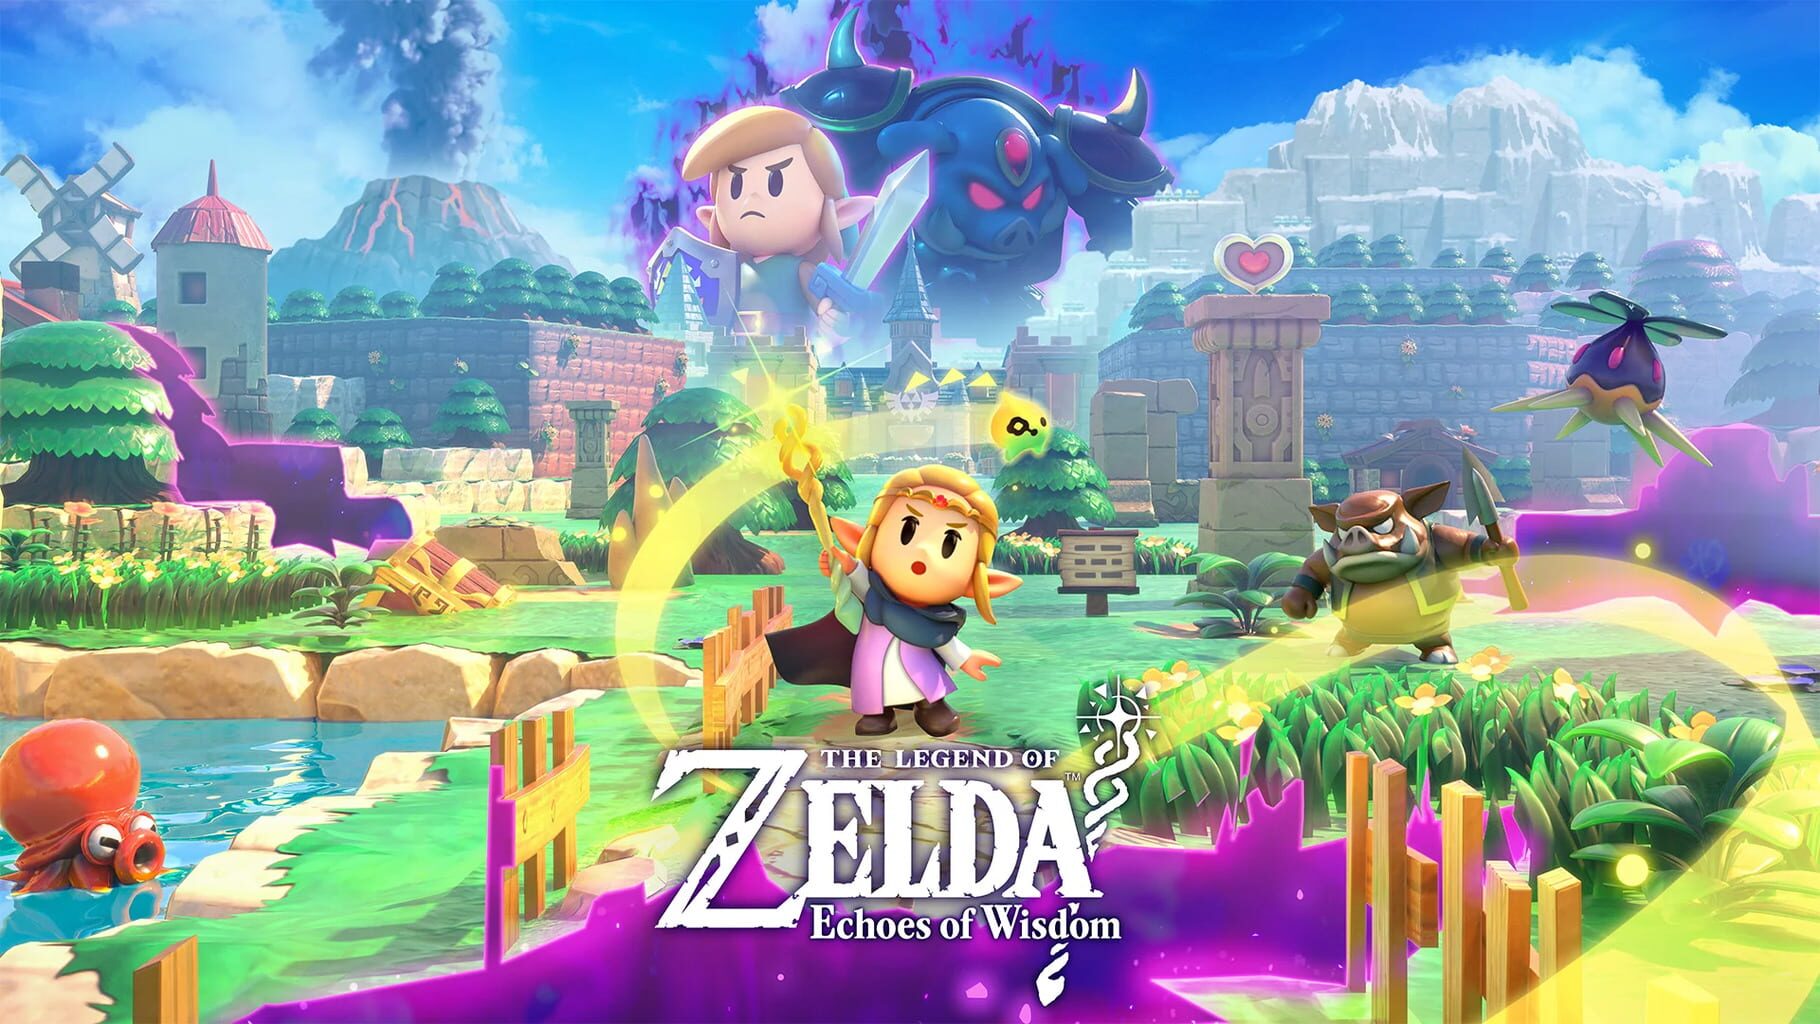 Artwork for The Legend of Zelda: Echoes of Wisdom